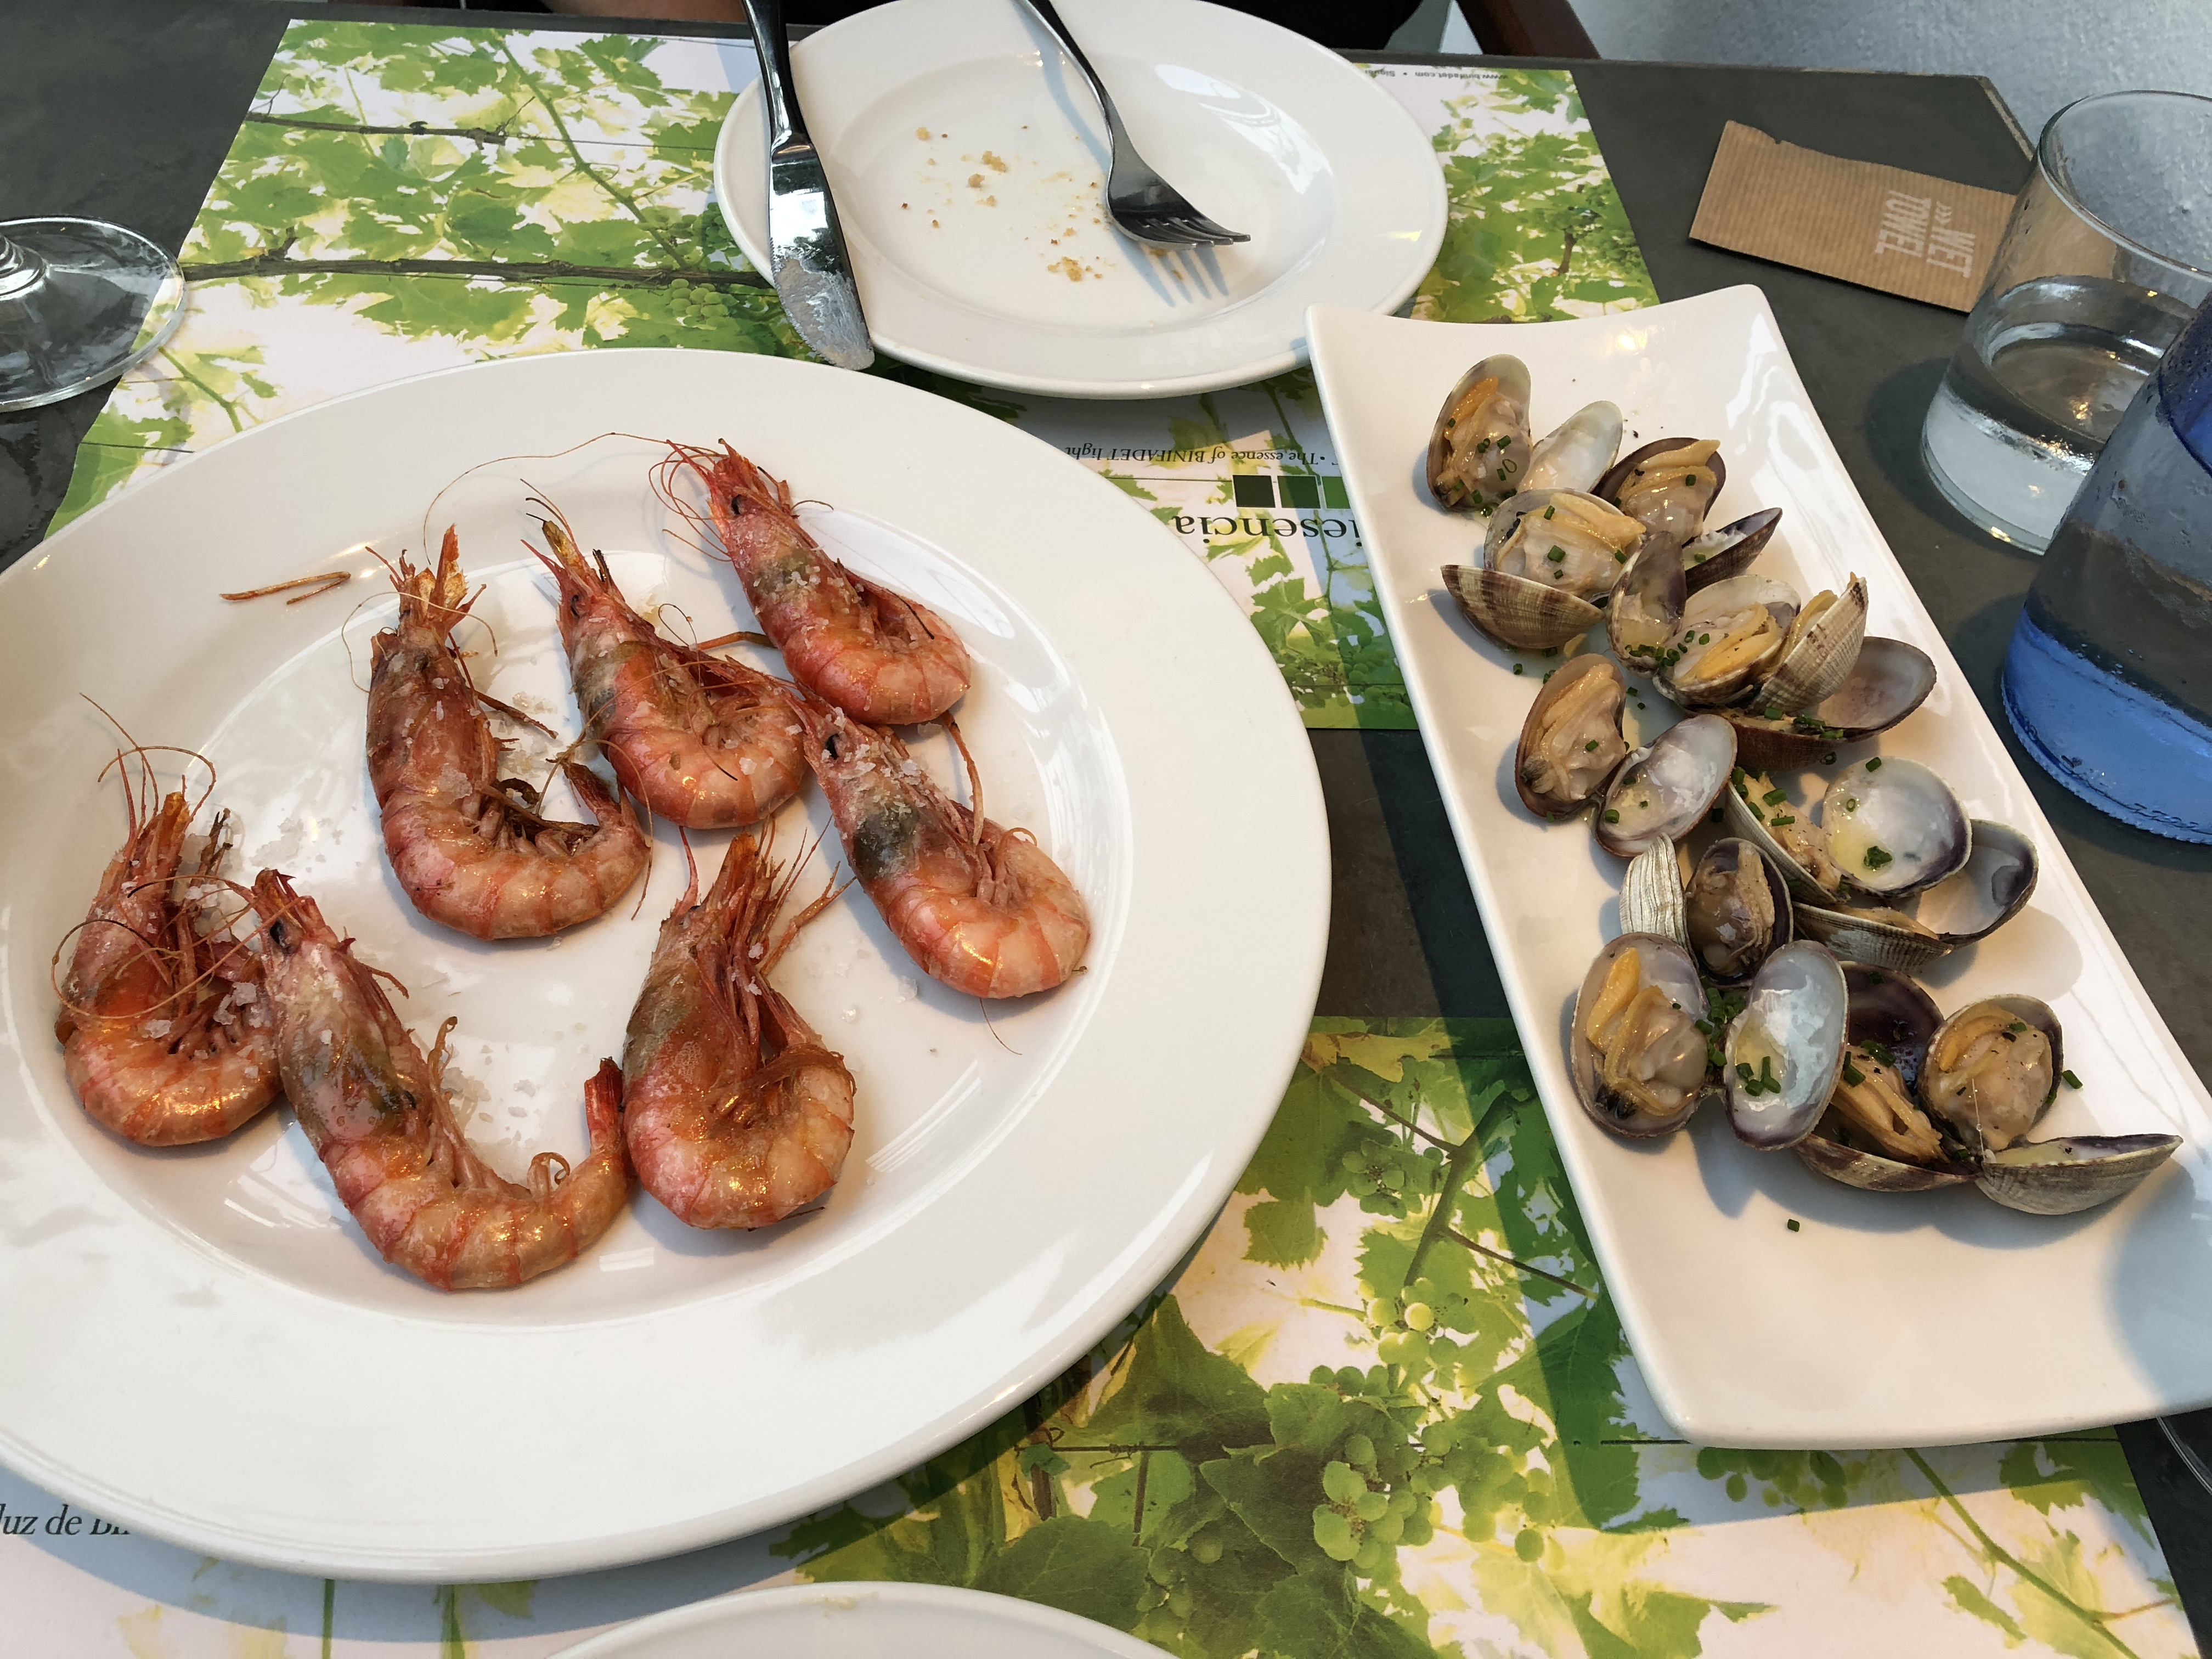 Garlic prawns and steamed clams at Binifadet